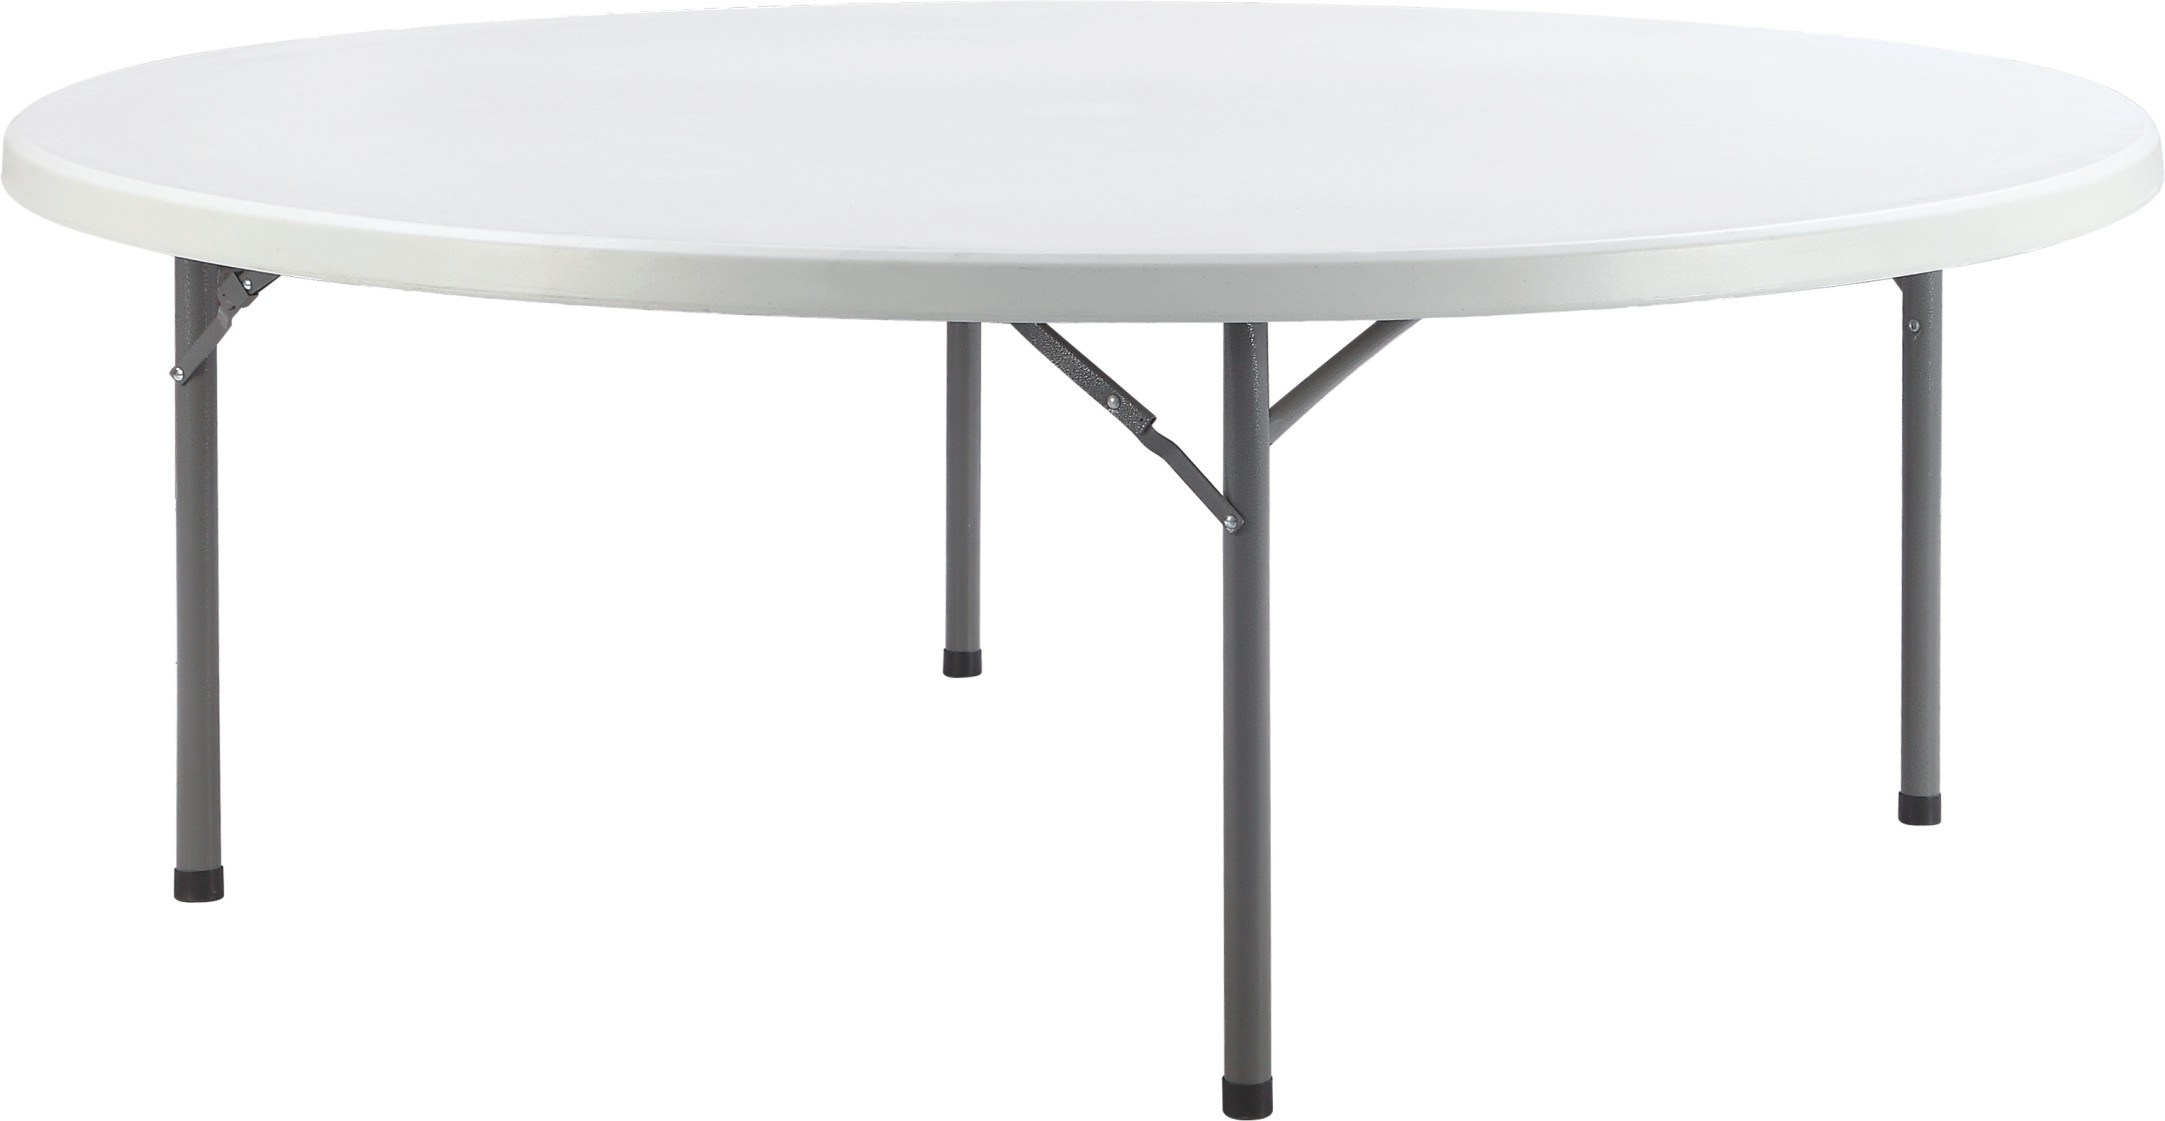 2m Plastic Folding Round Table for Restaurant and Hotel, Plastic Foldable Round Table, Dining Table, Hotel Furniture Portable Table, Camping Table